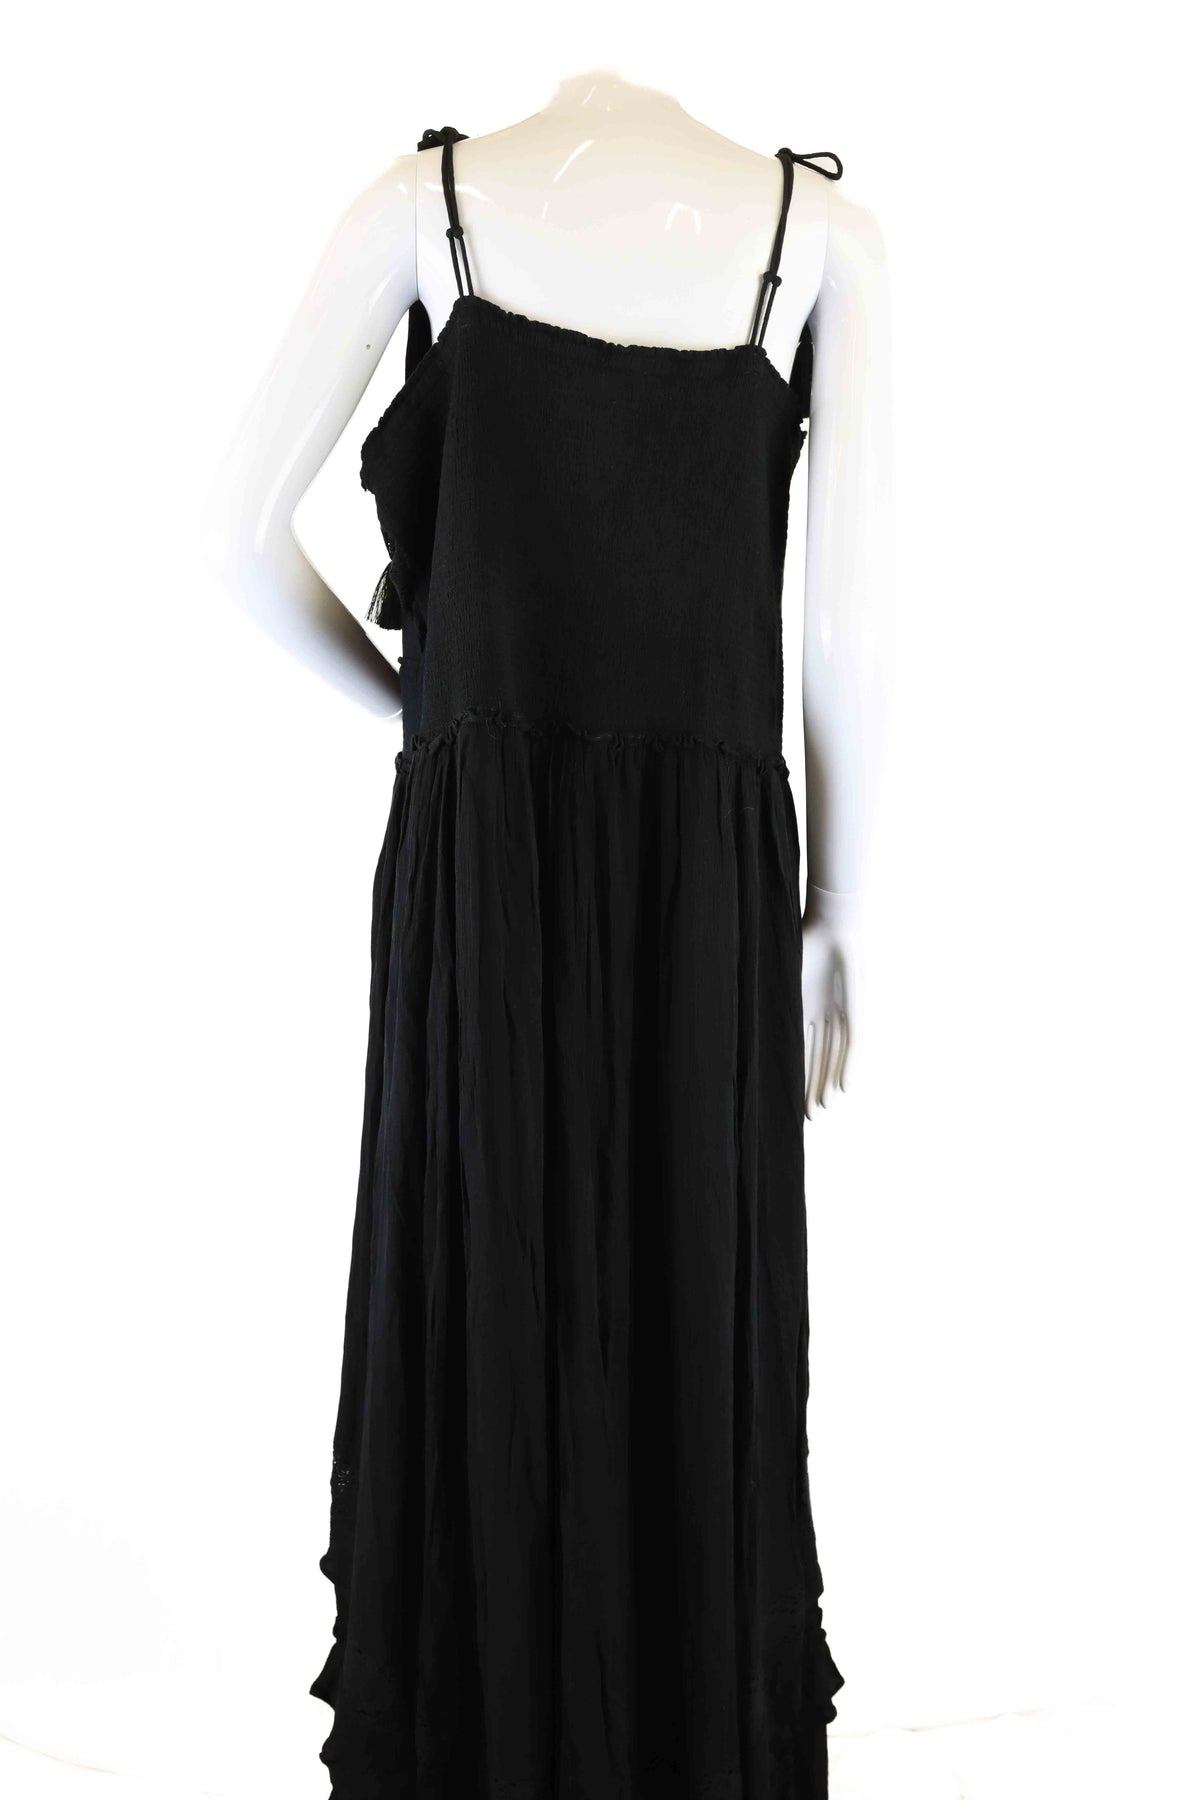 The Poetic gypsy Black Dress 22